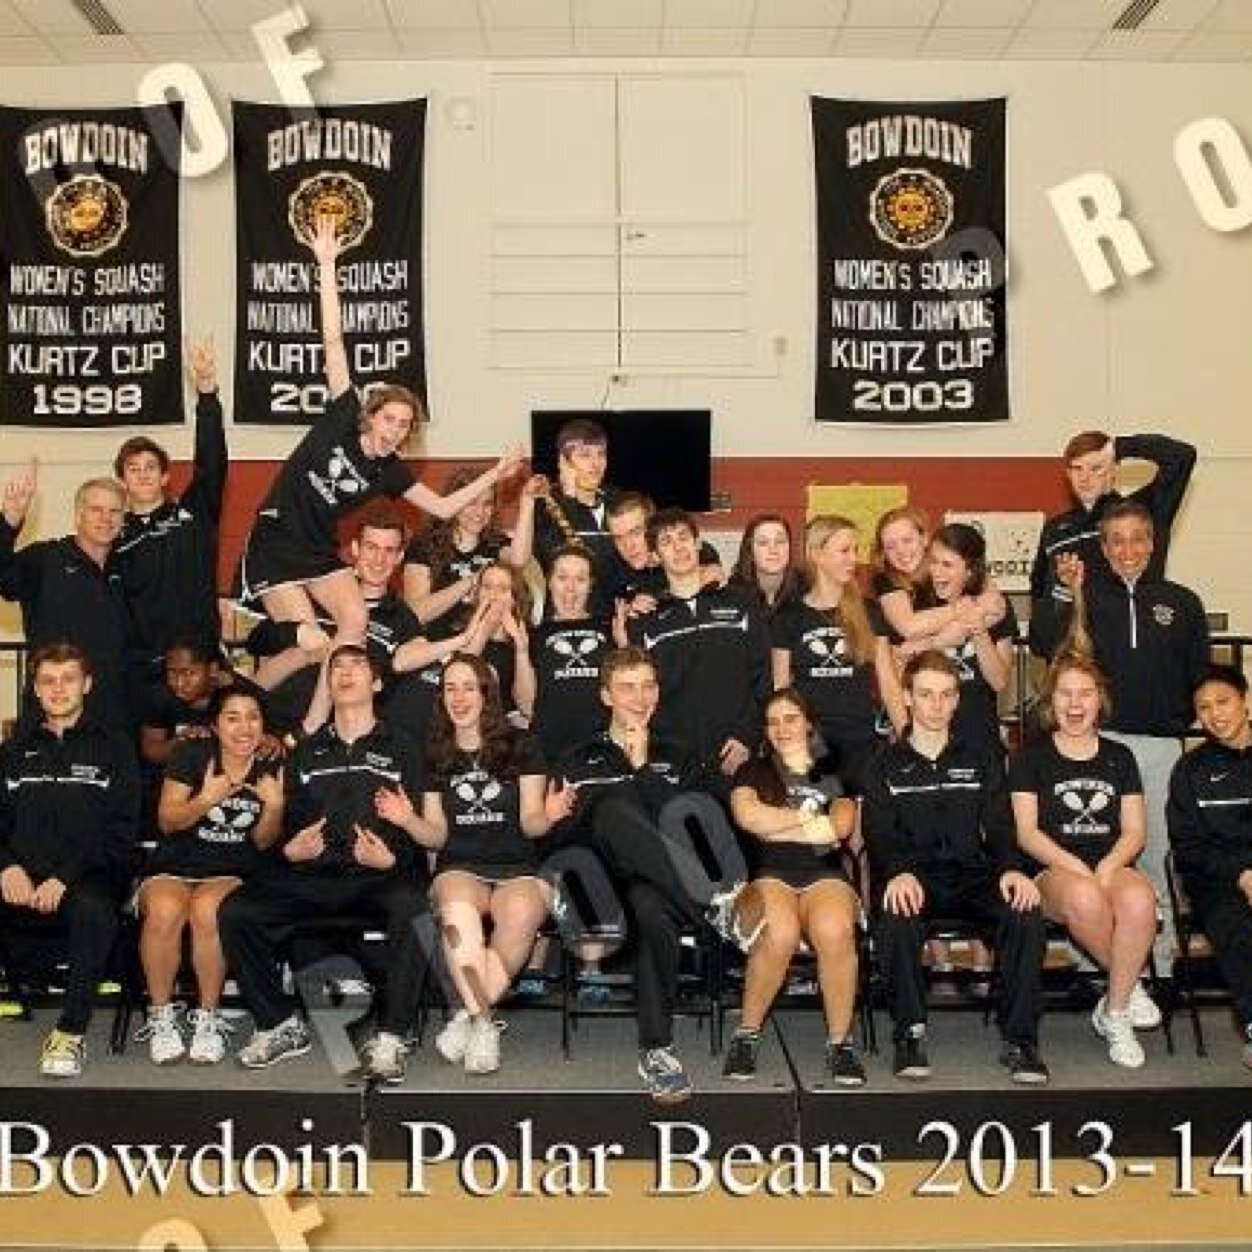 The Official Twitter of the Bowdoin Polar Bears